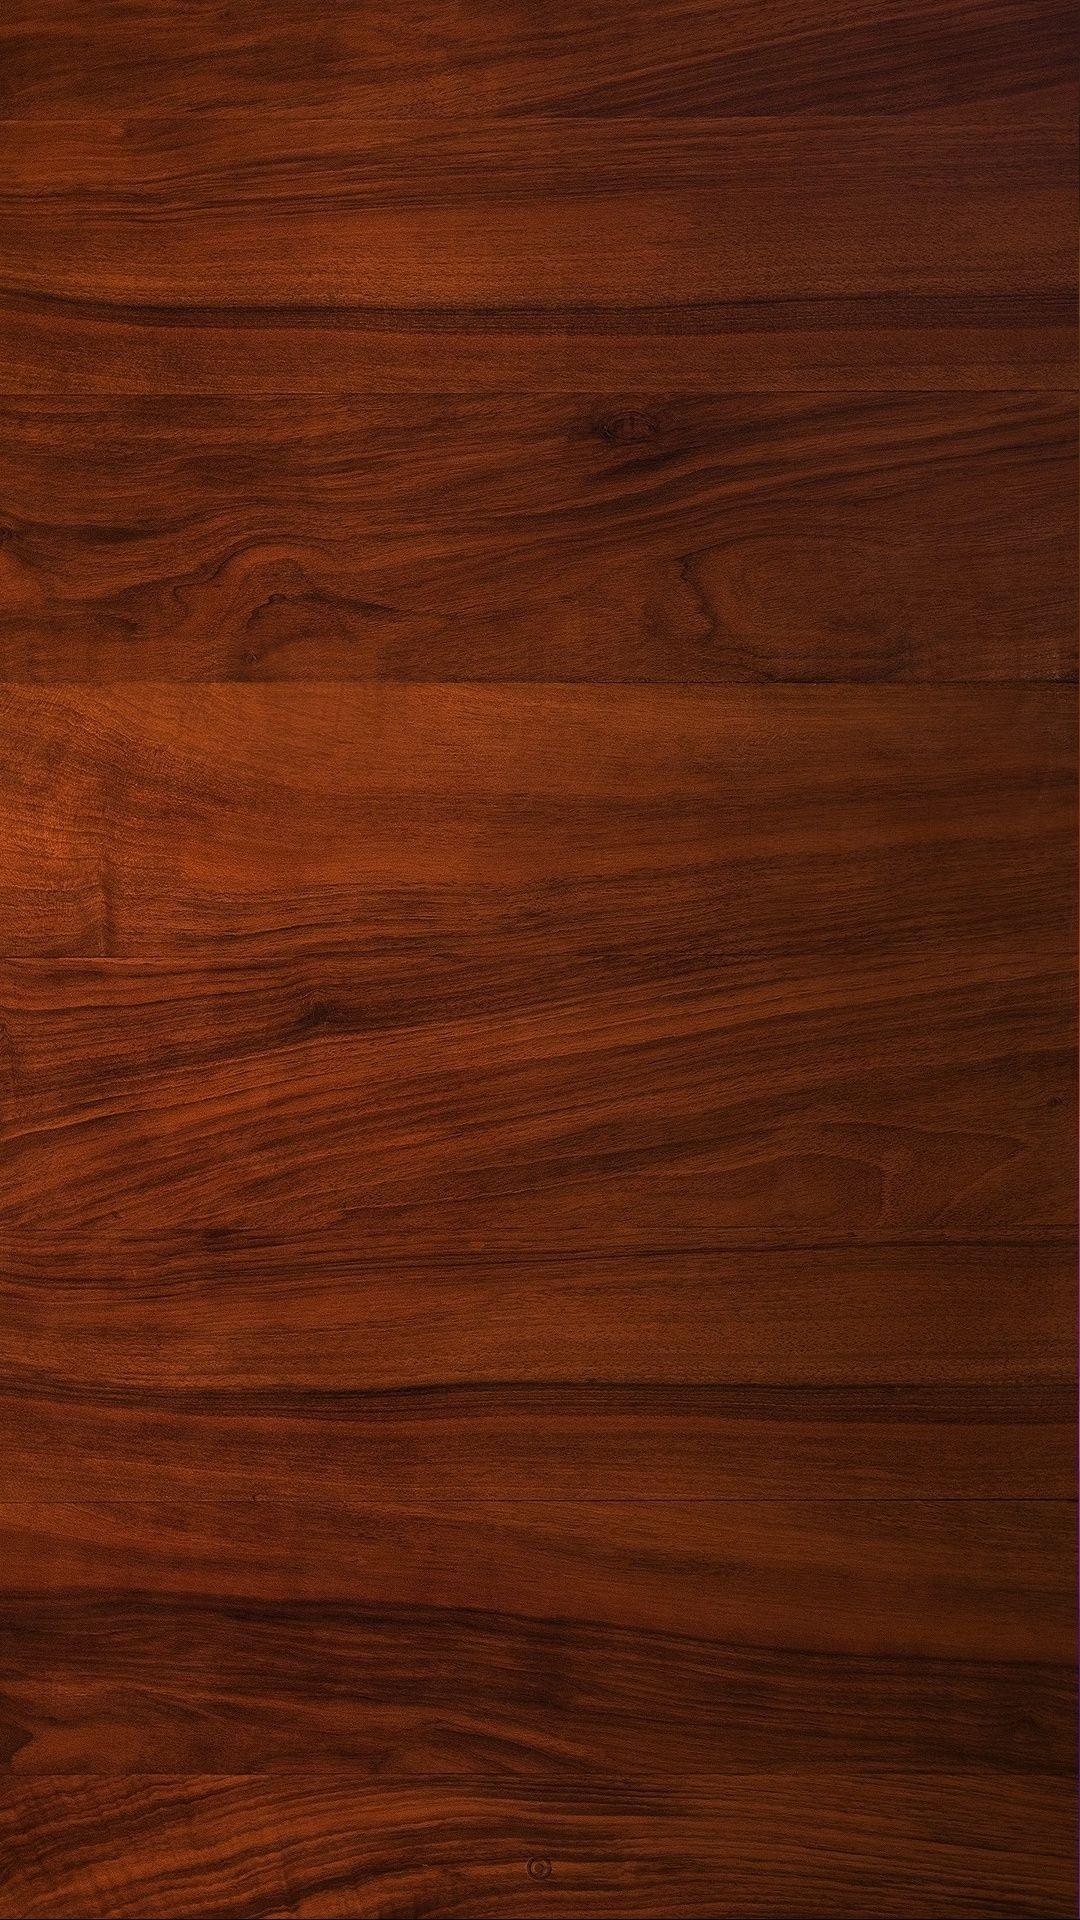 Cherry Wood Pattern Texture iPhone 6 Plus HD Wallpaper. handpicked